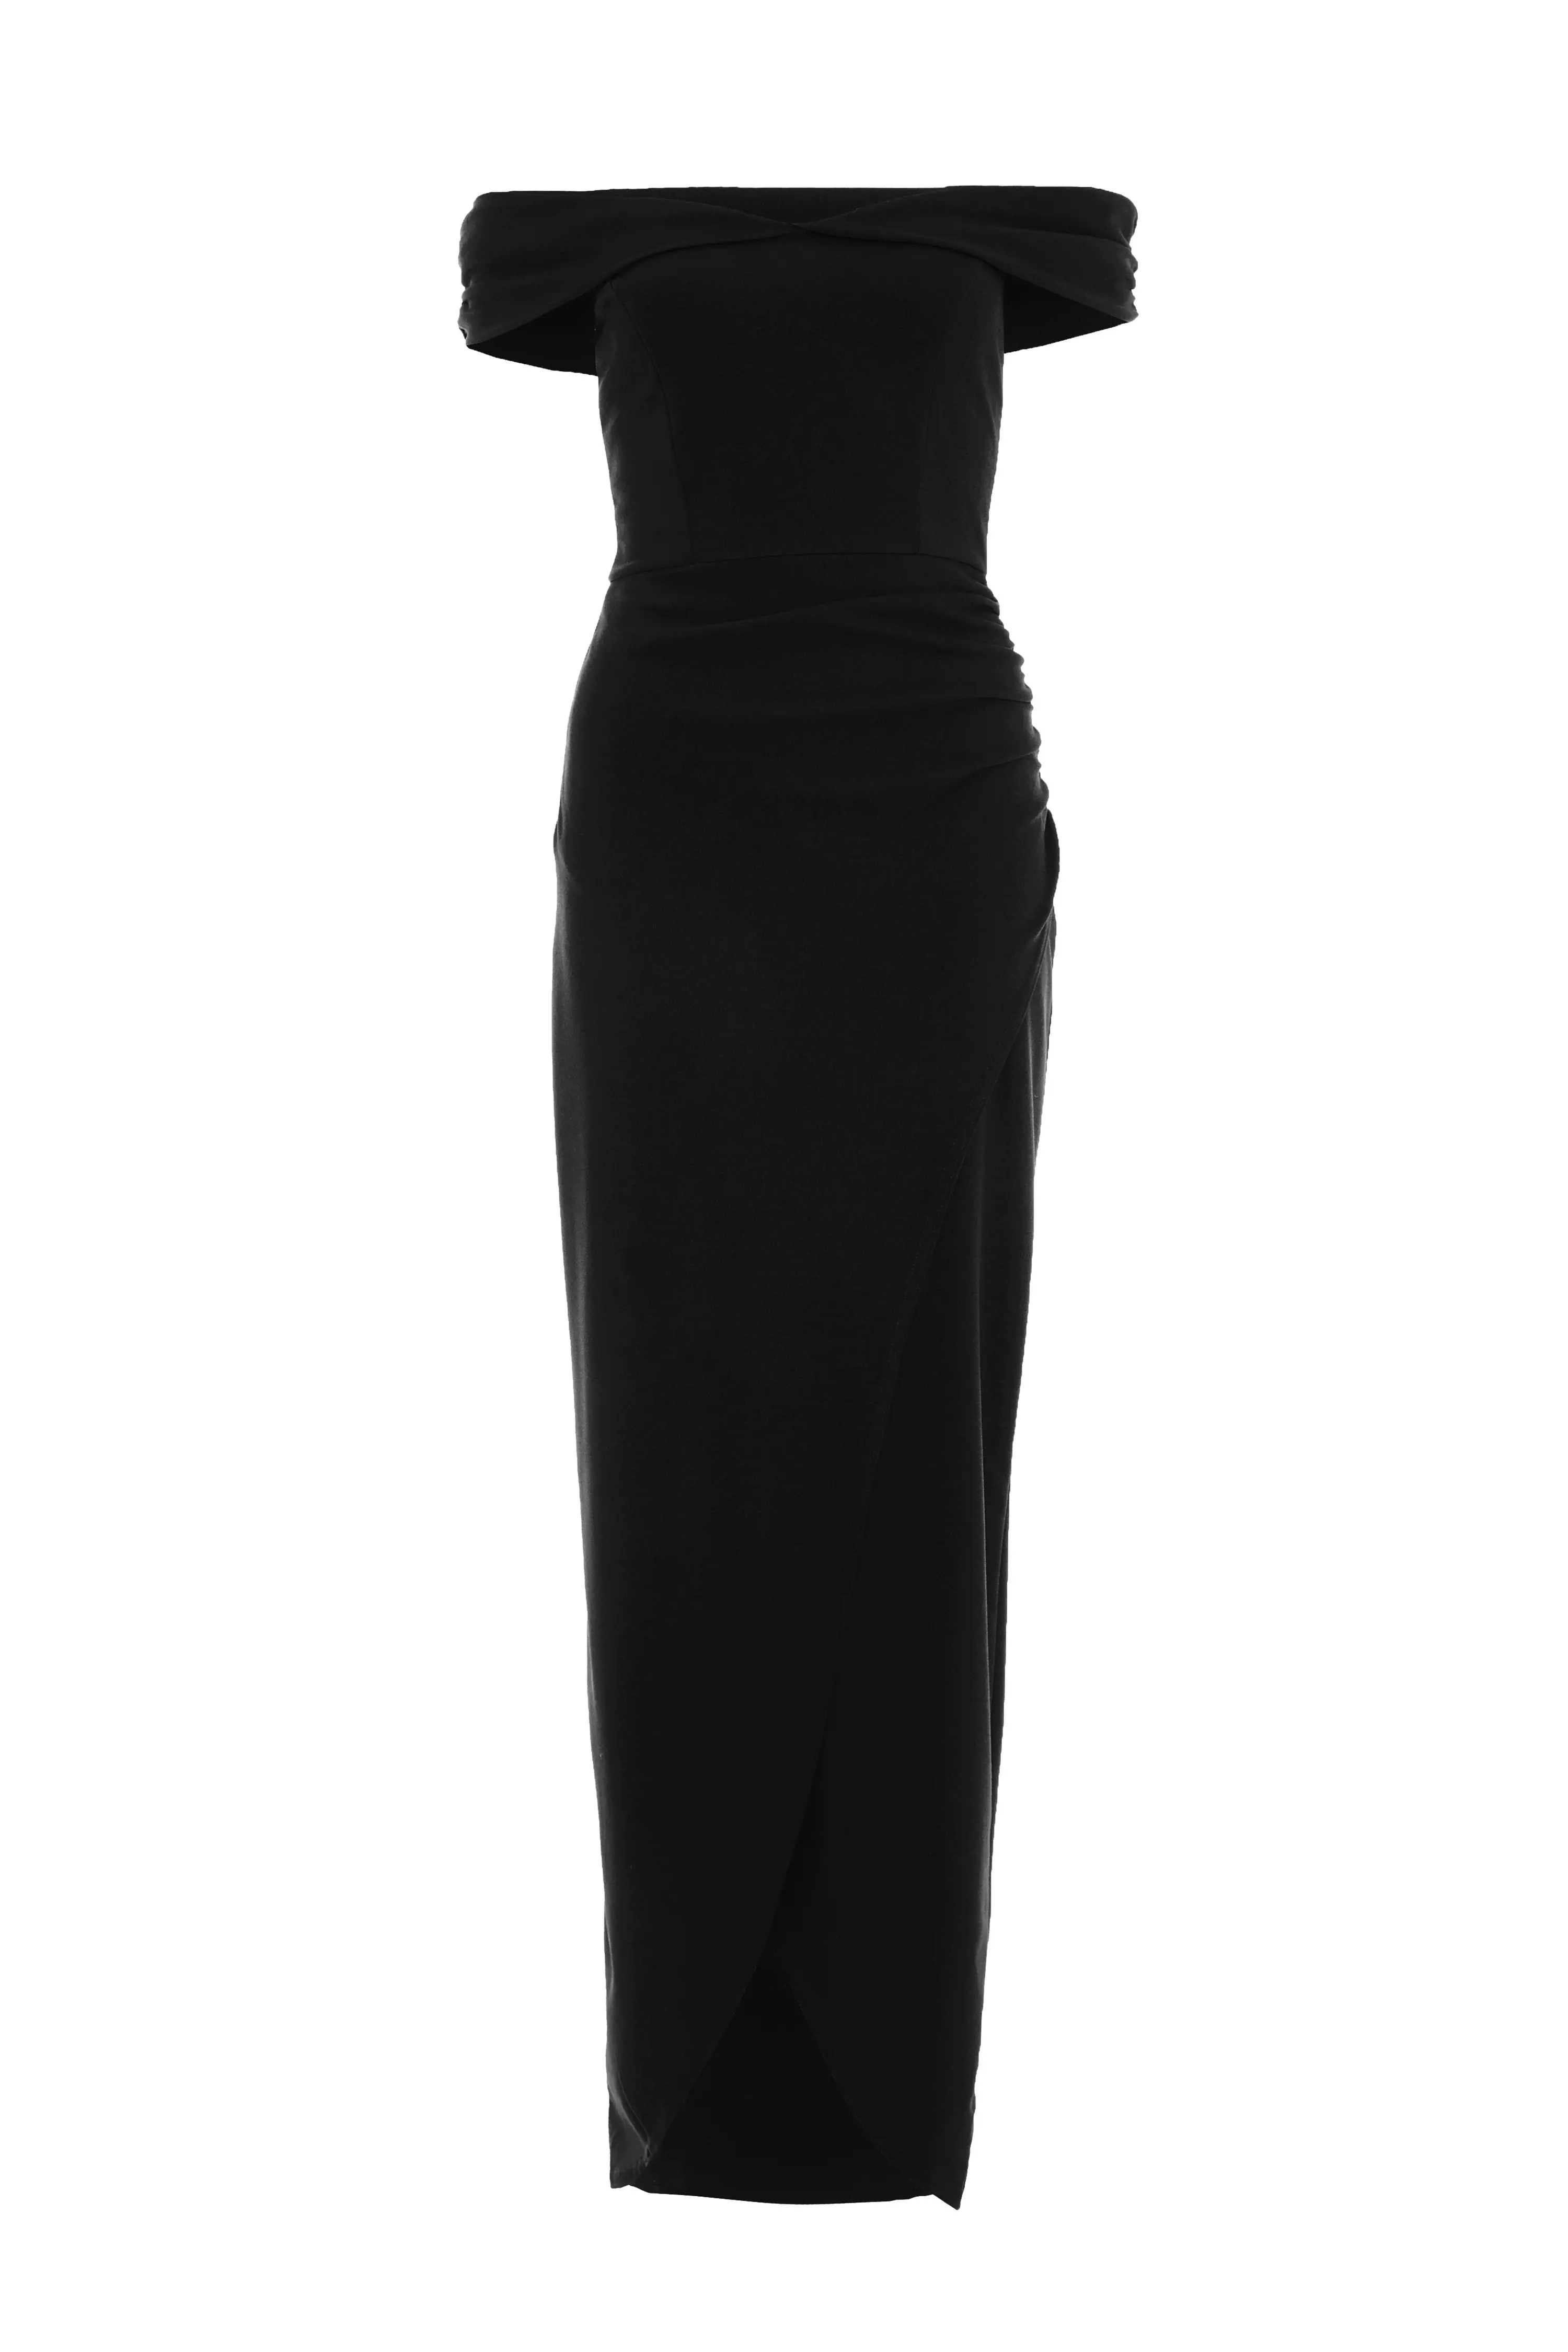 Black Ruched Bardot Maxi Dress - QUIZ Clothing